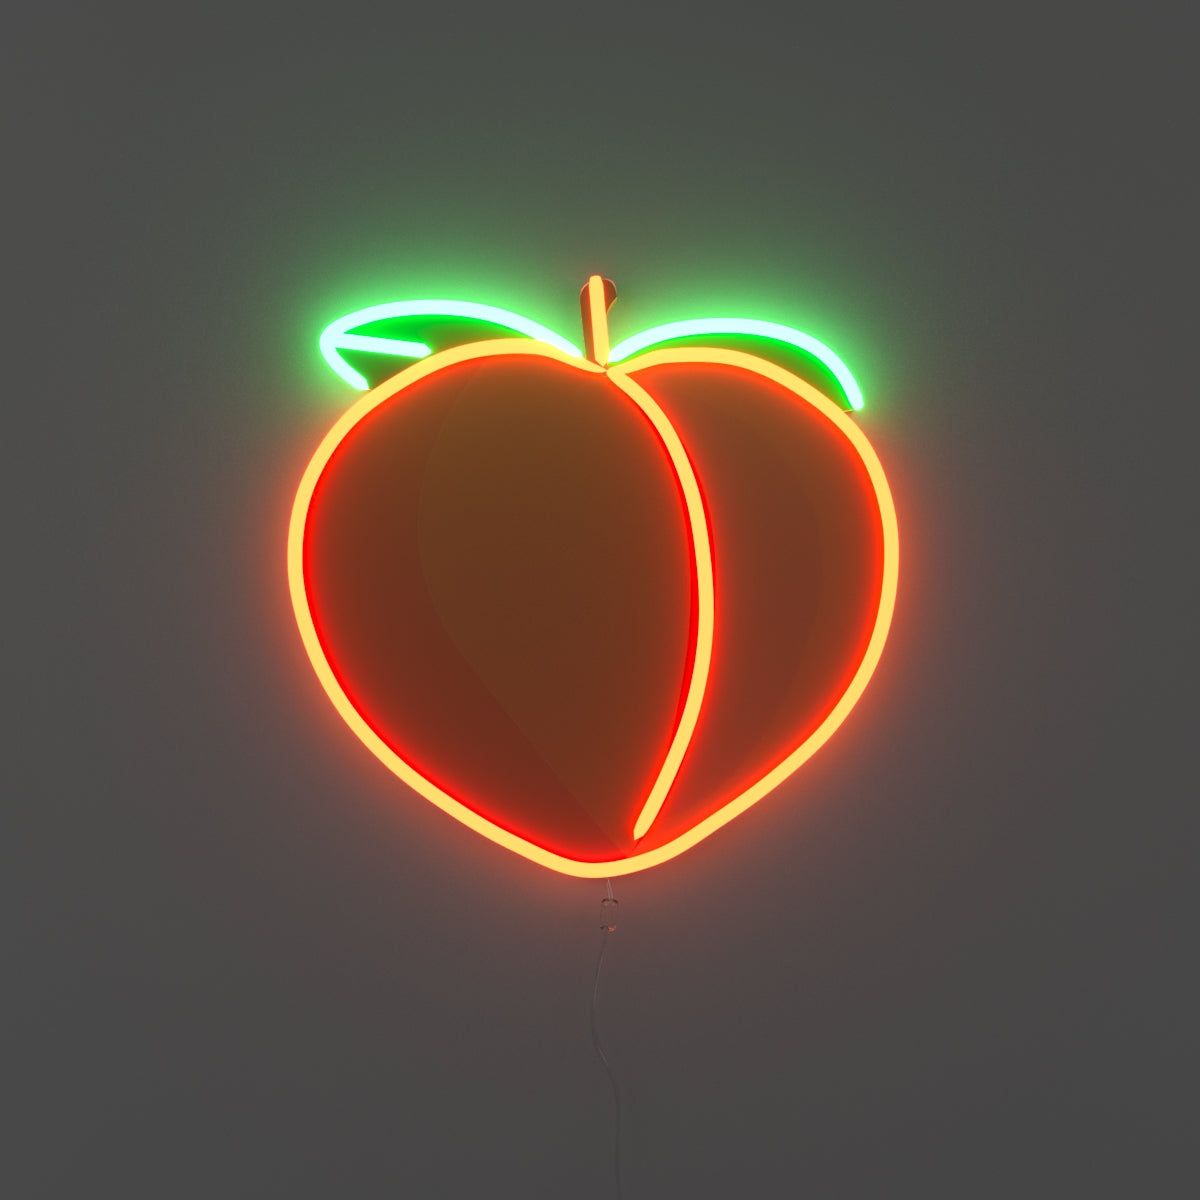 Peachy neon sign